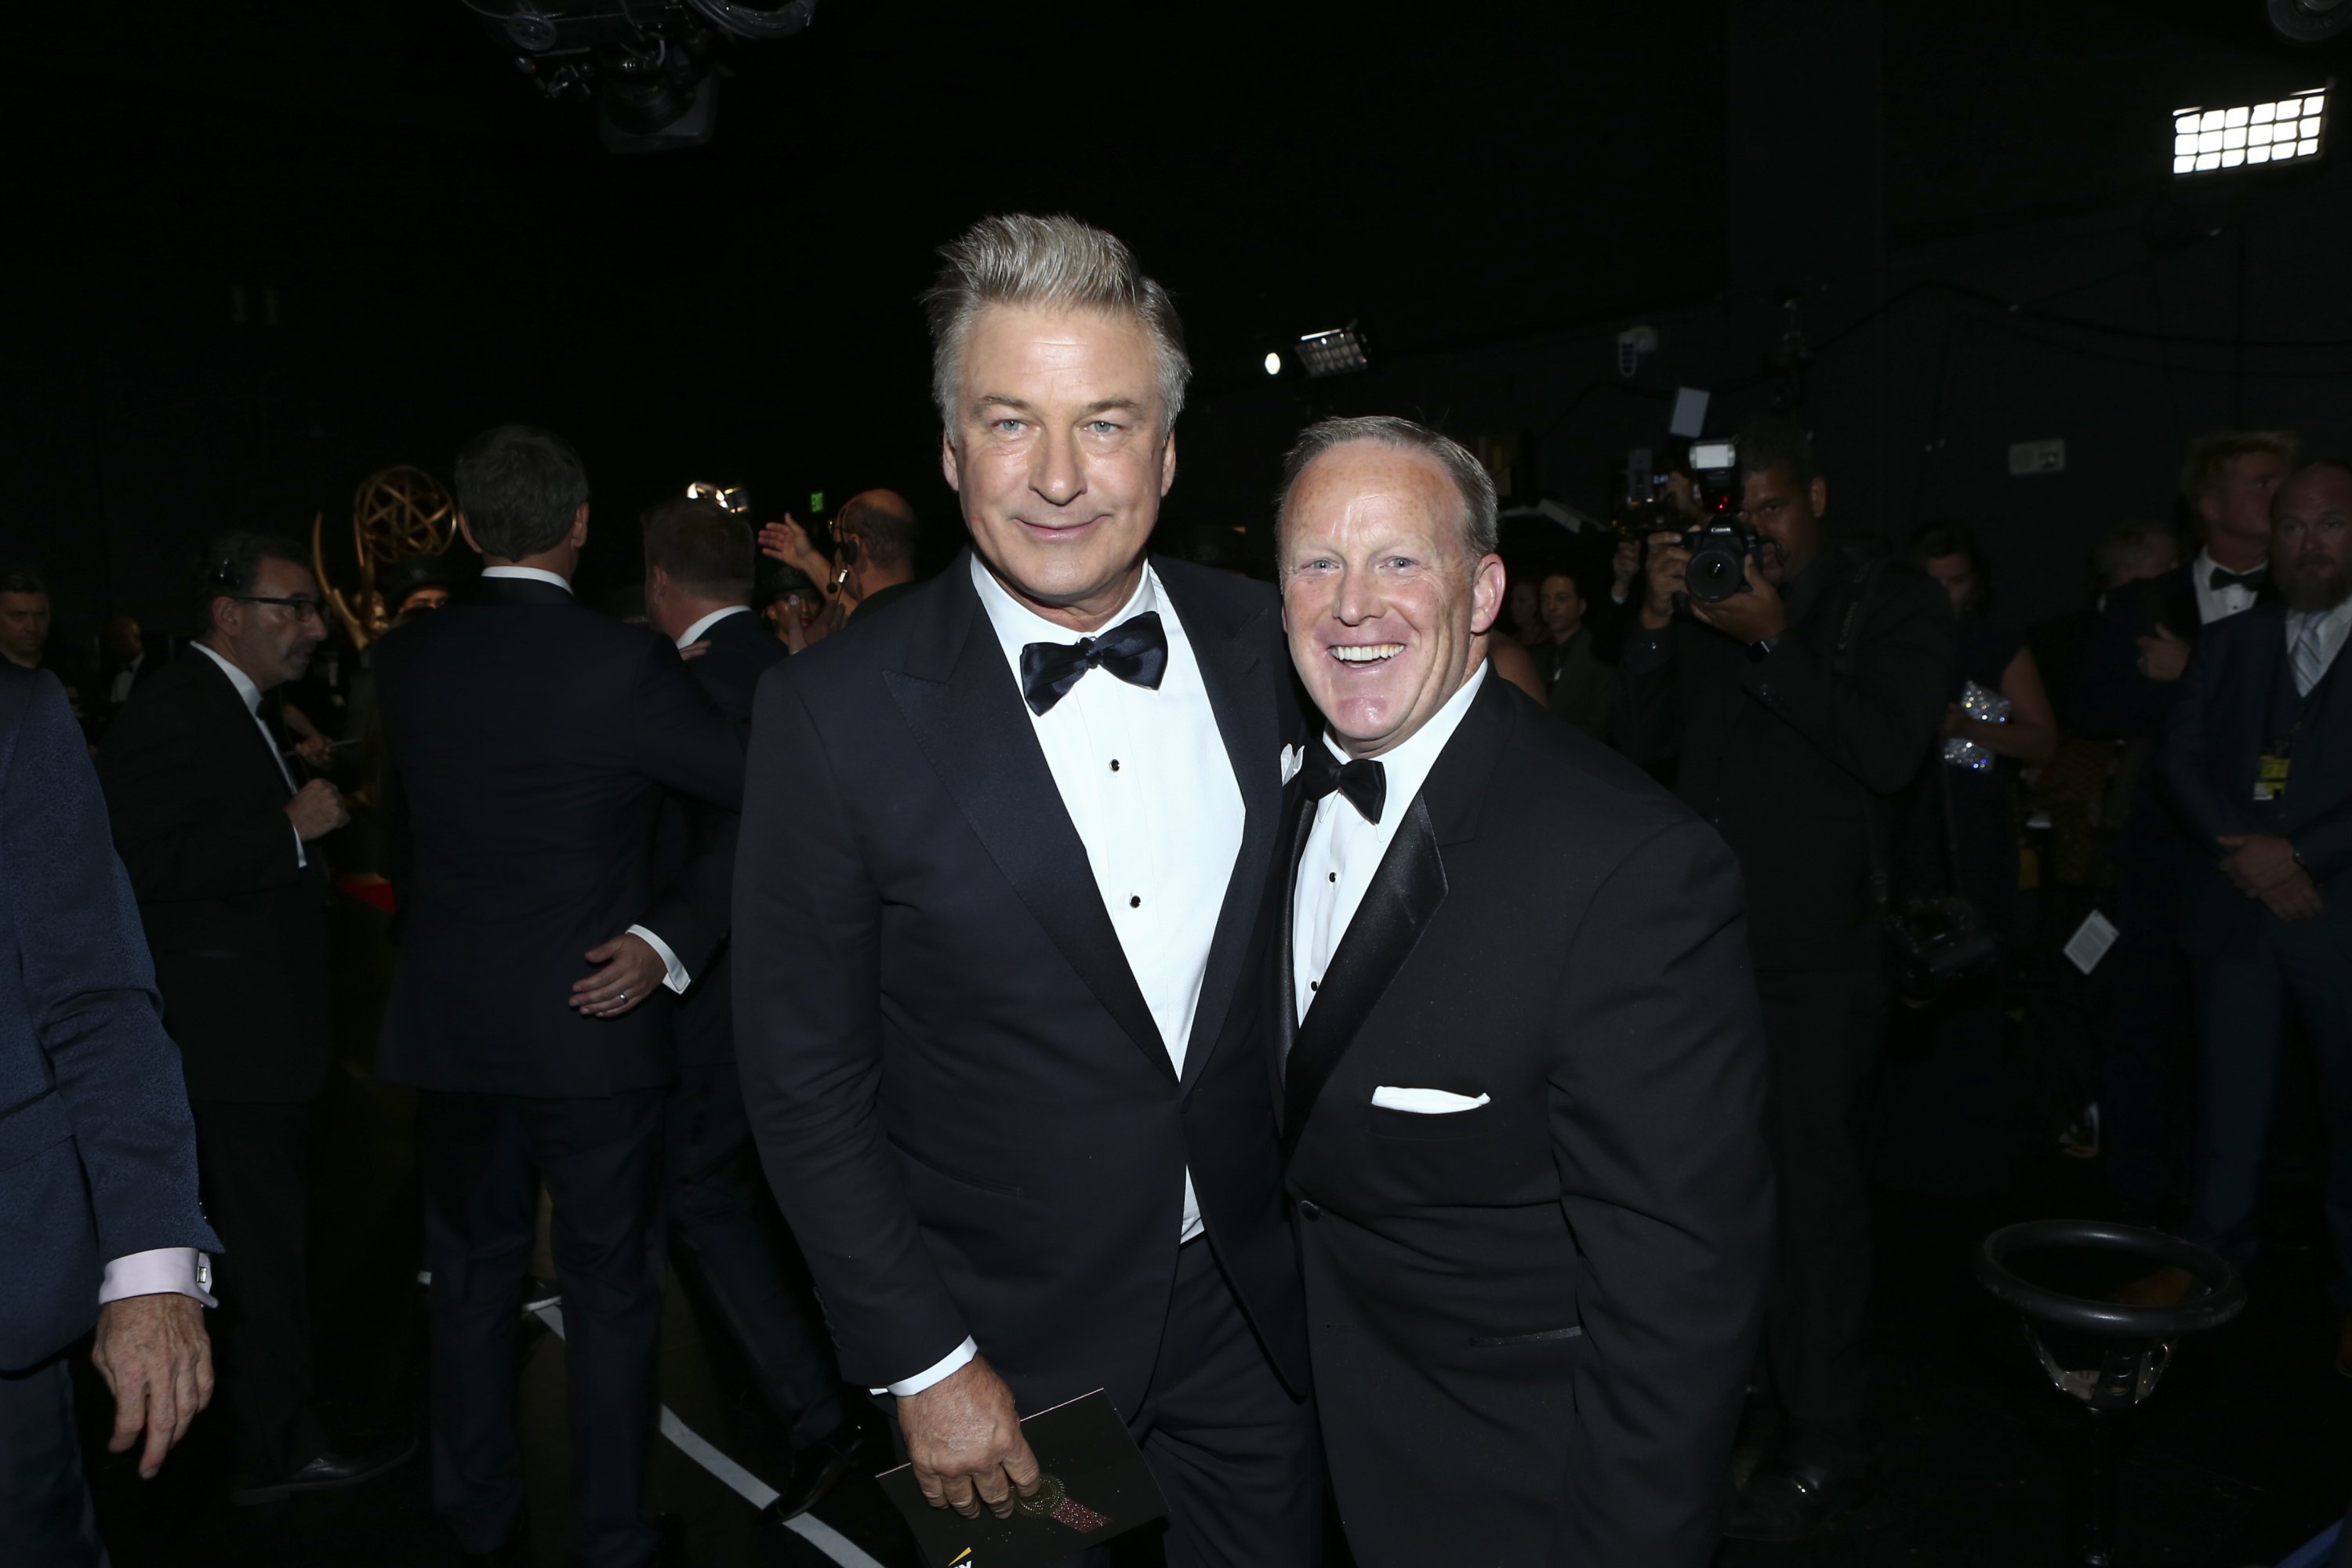 Alec Baldwin and Sean Spicer backstage at the 69th Primetime Emmy Awards, Sunday, September 17, 2017.